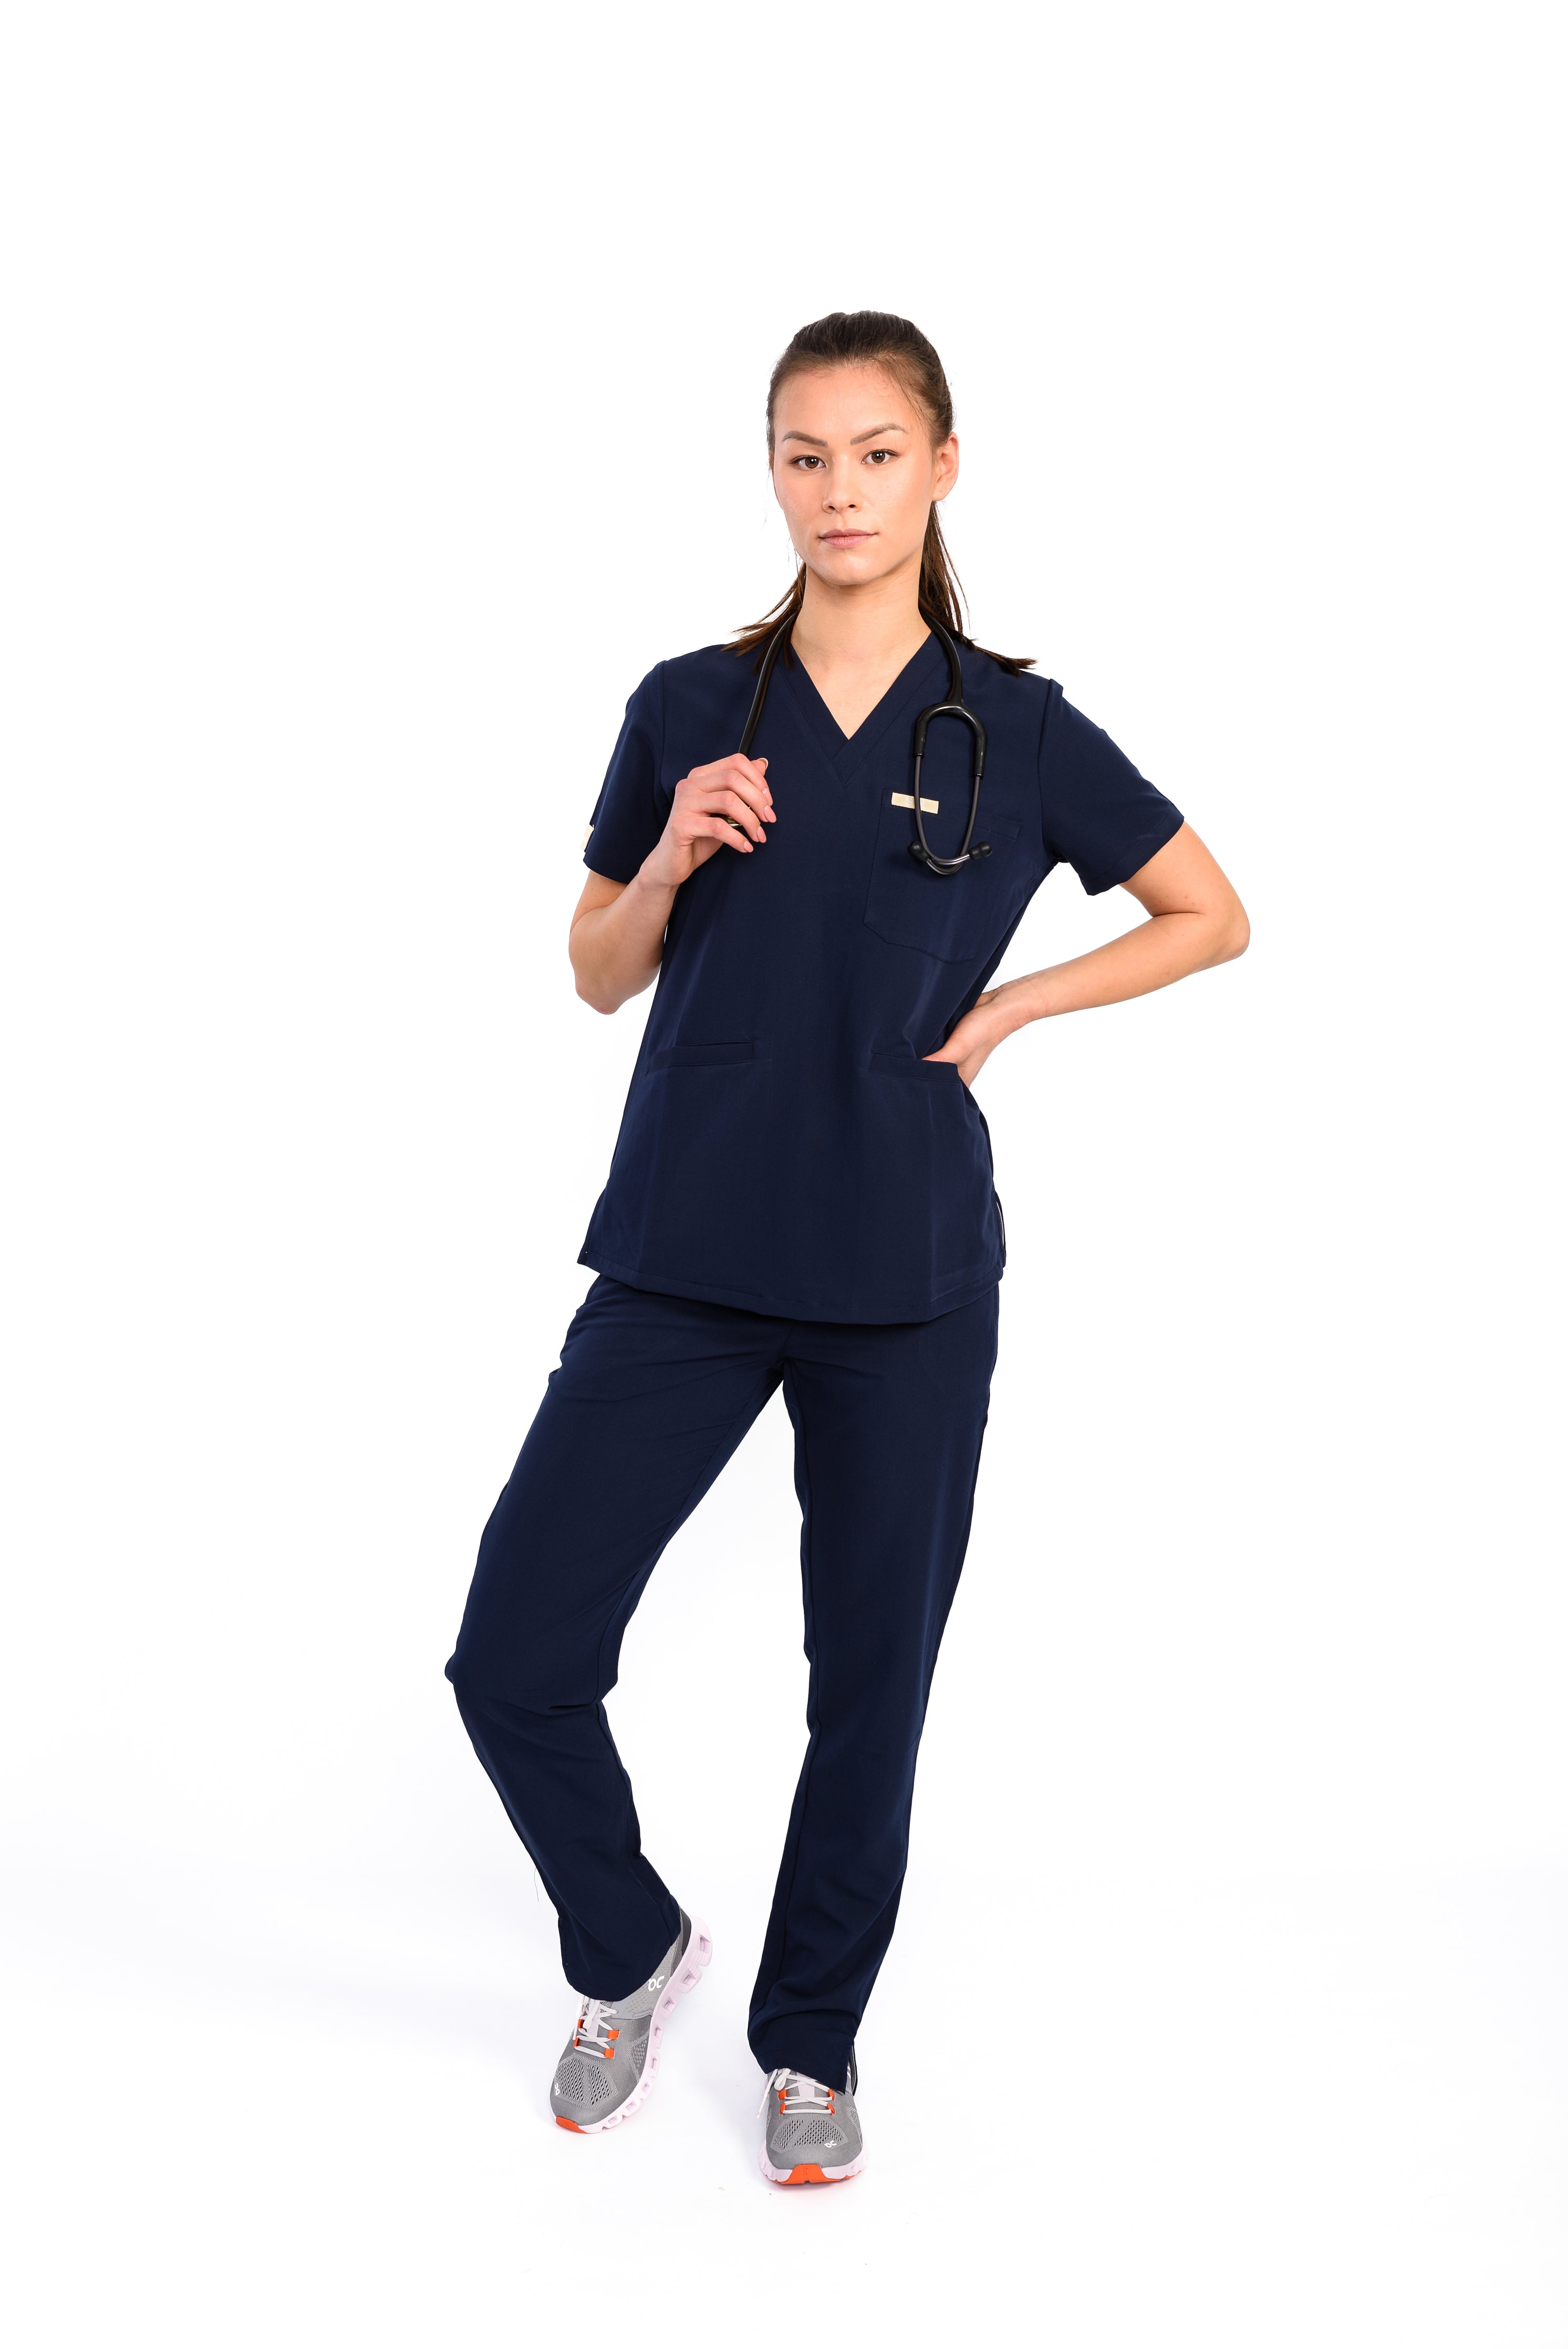 Associated Uniforms Nurse Uniform Navy Blue M Shirt, Pant Hospital Scrub  Price in India - Buy Associated Uniforms Nurse Uniform Navy Blue M Shirt,  Pant Hospital Scrub online at Flipkart.com